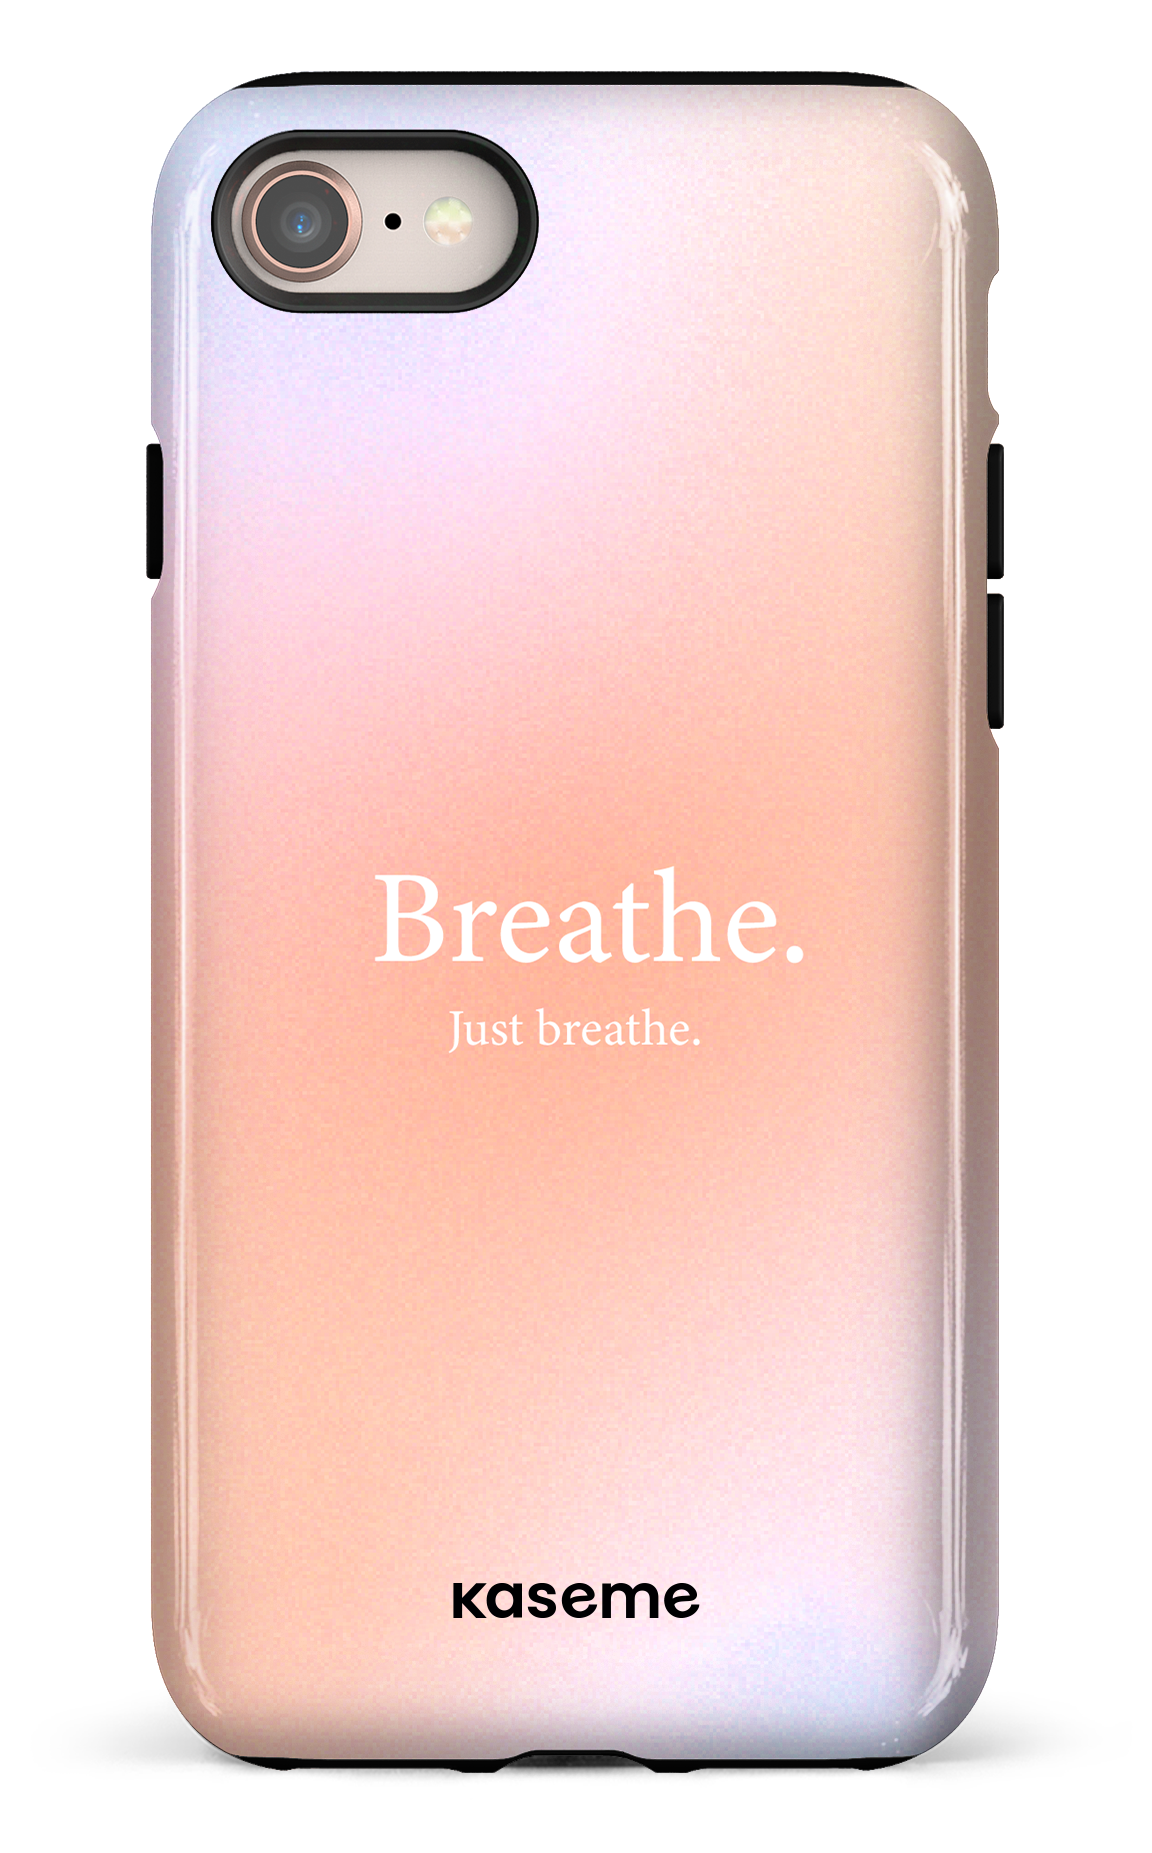 Just breathe - iPhone 8